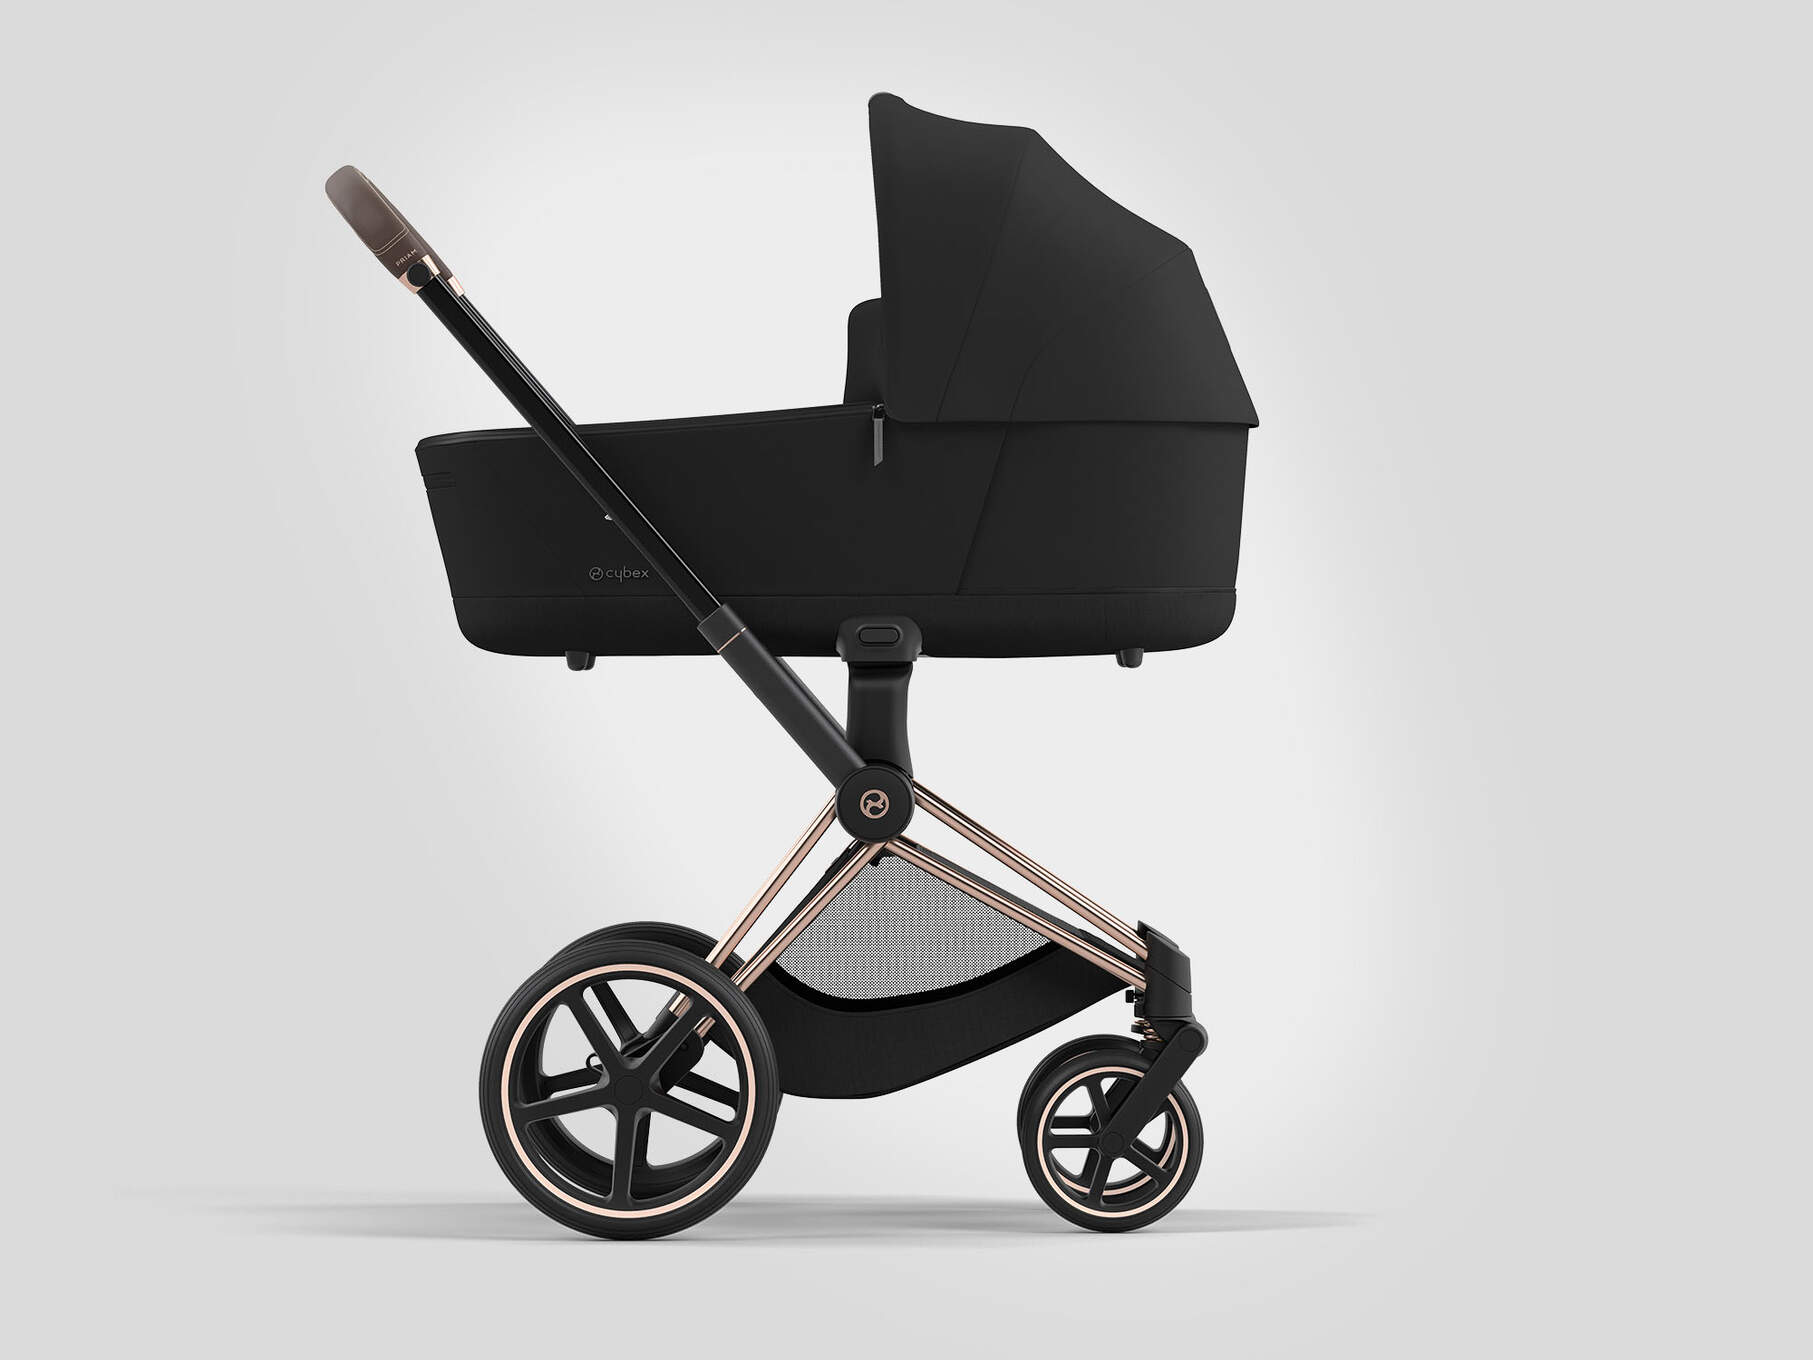 CYBEX Platinum–barnvagn med Priam Lux Carry Cot bärsäng visad på Priam chassi